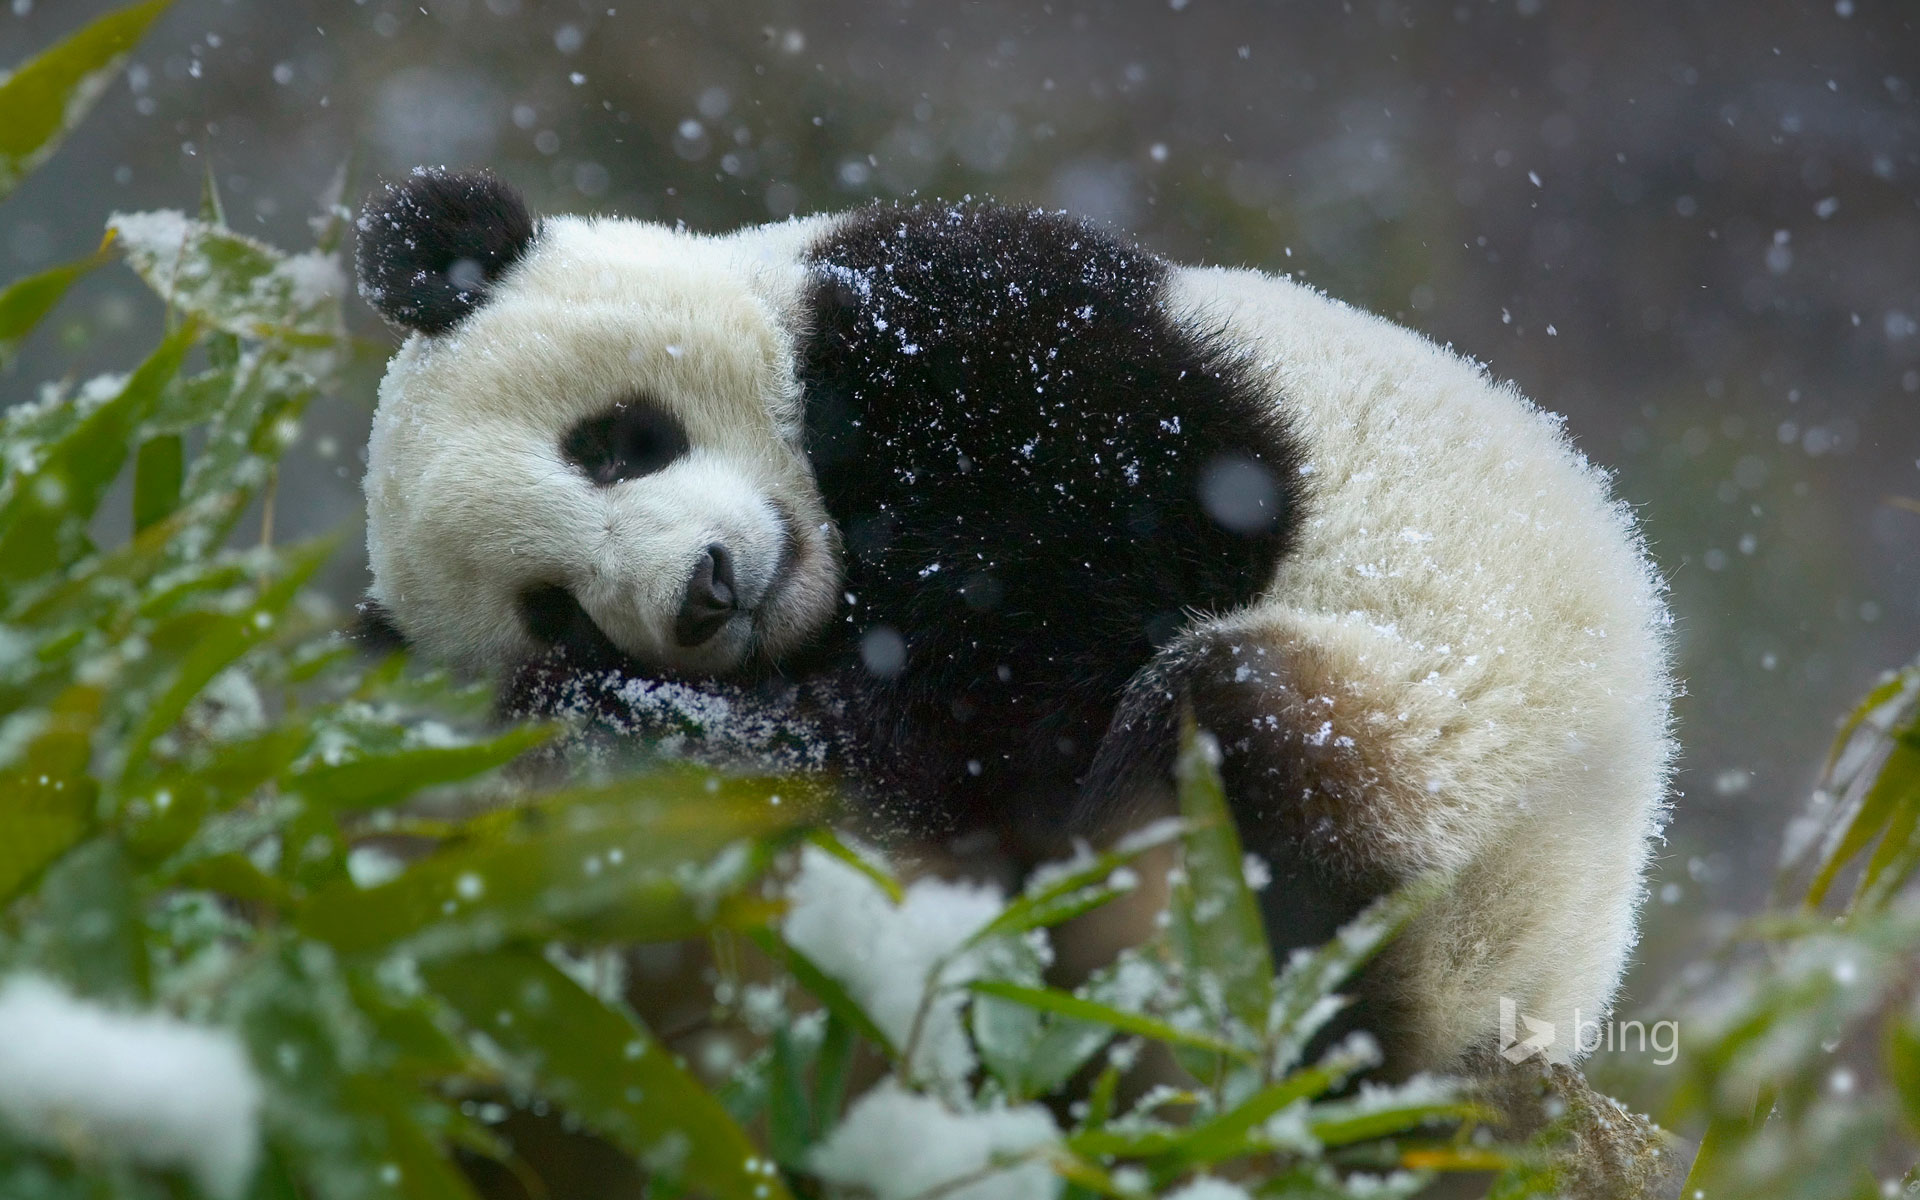 Giant panda cub, Wolong National Nature Reserve, Sichuan province, China